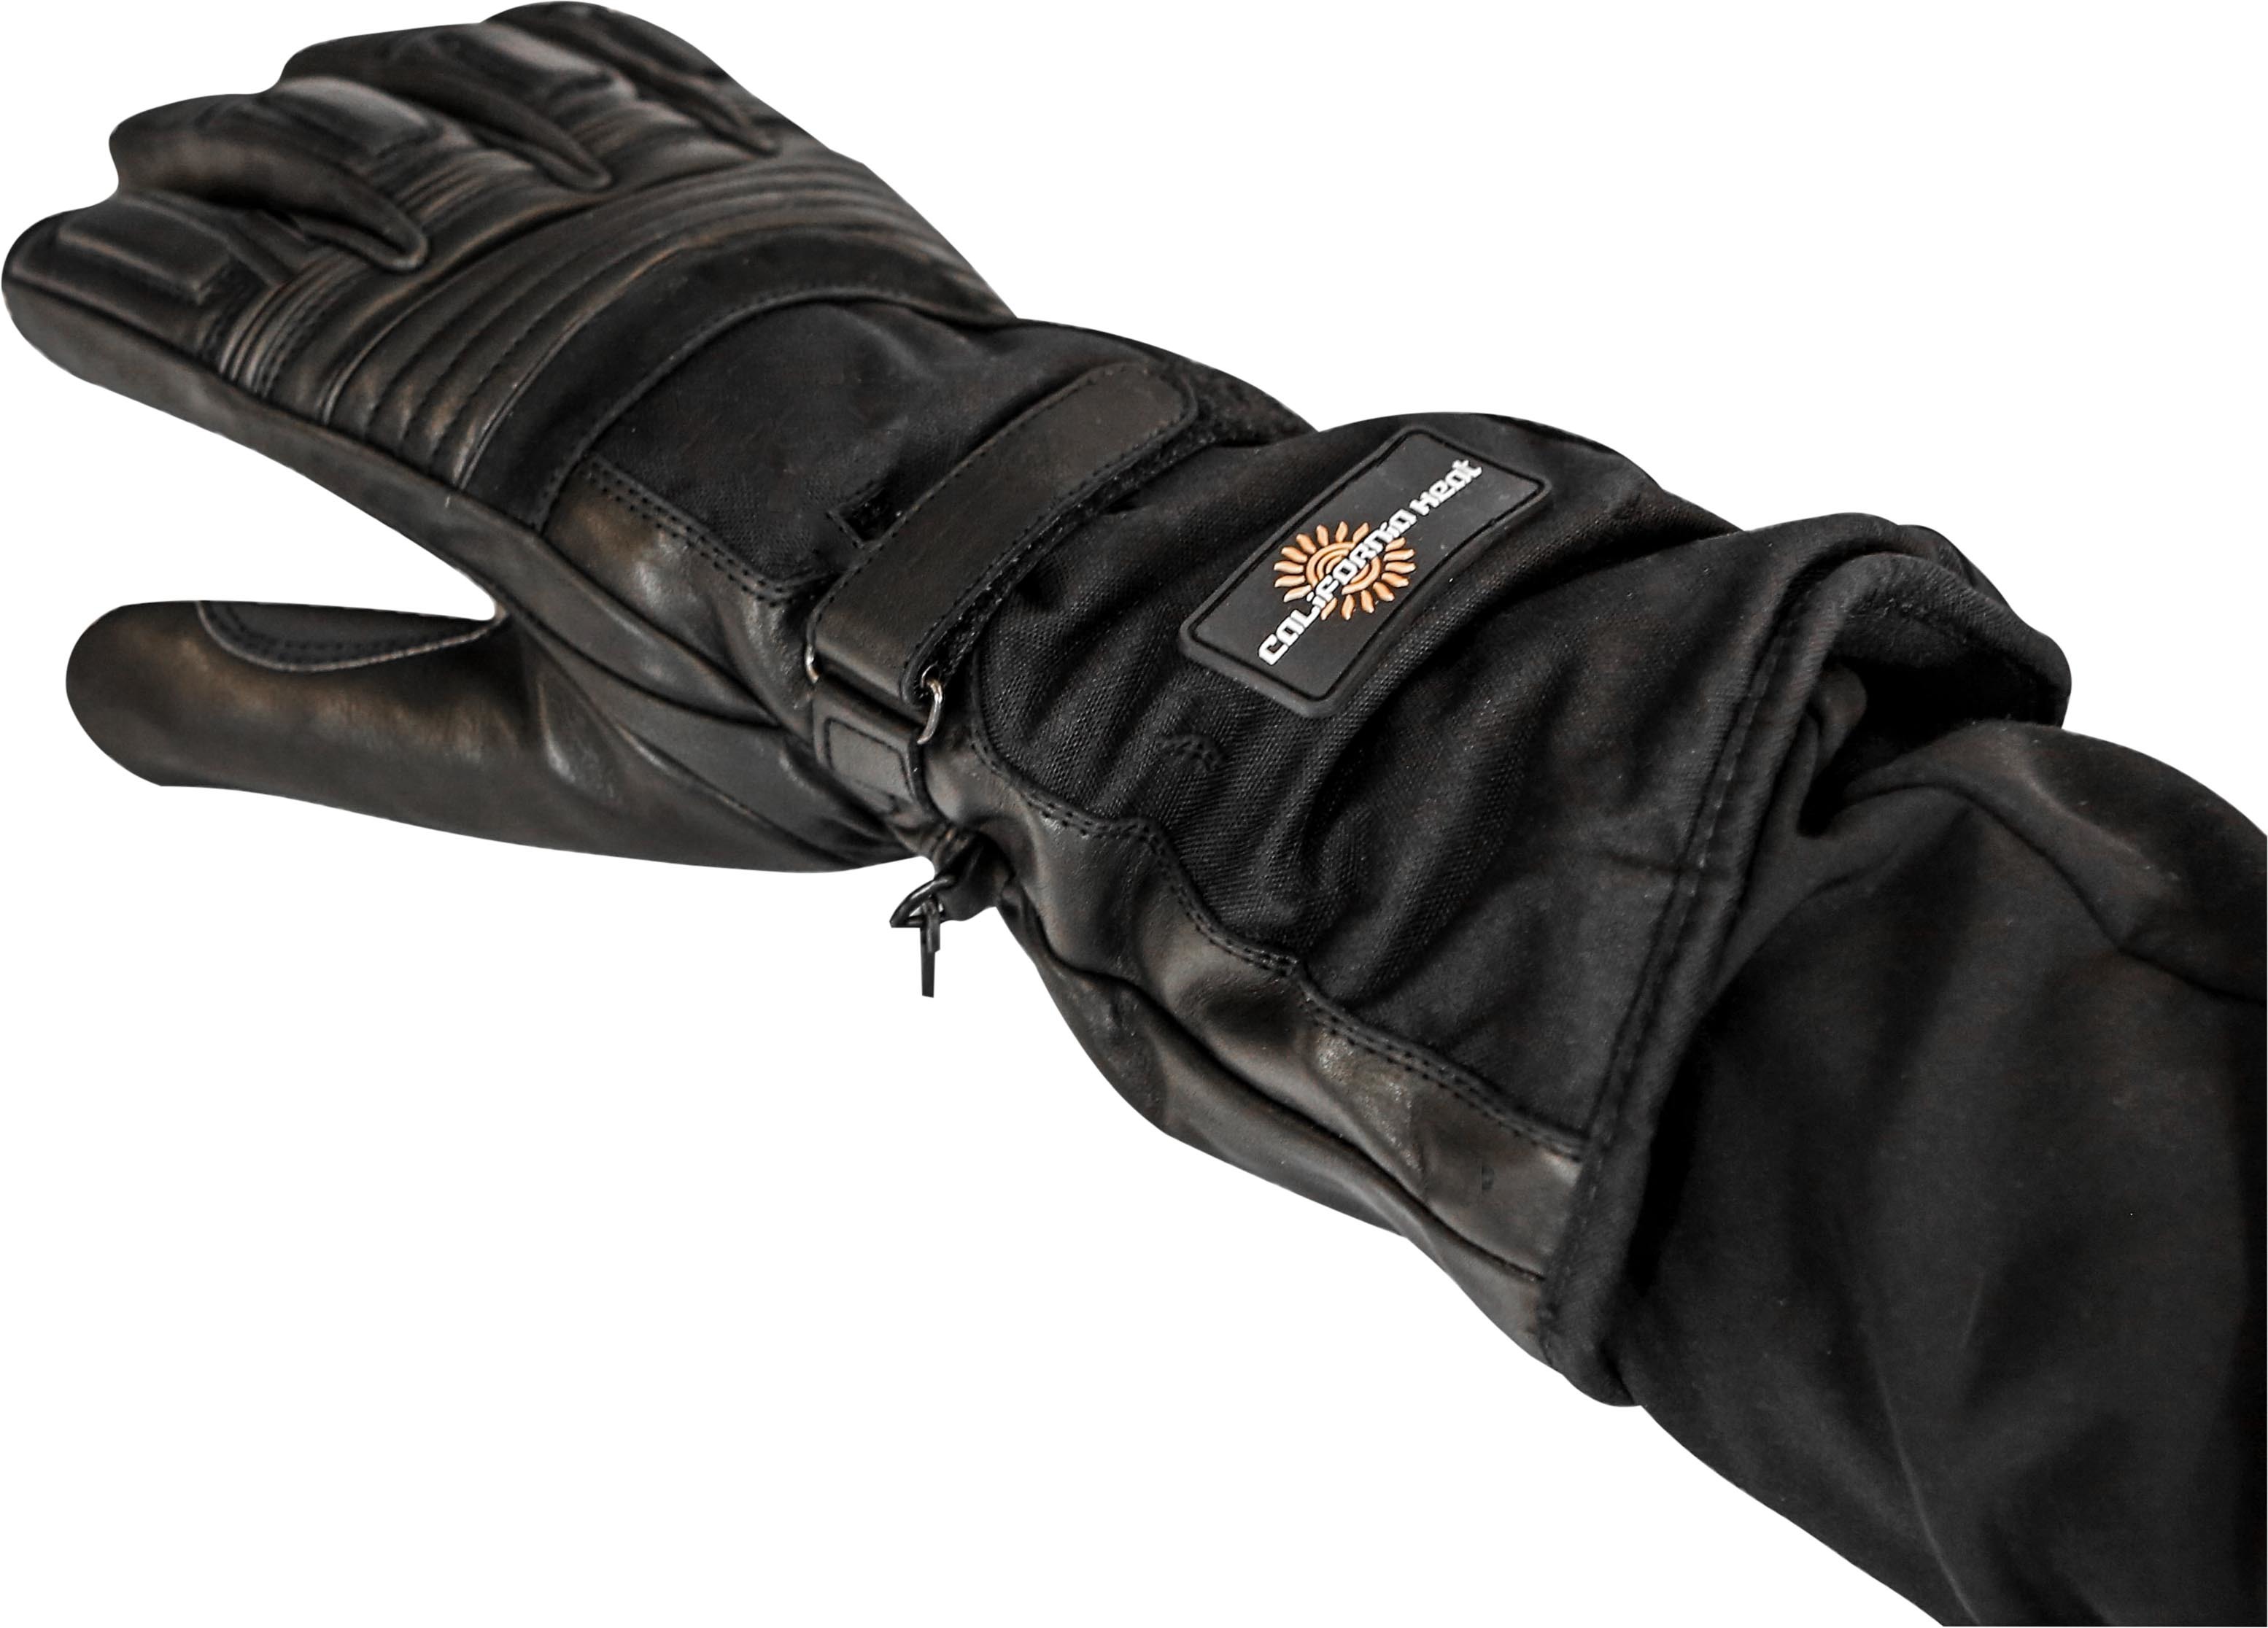 12V Heated Gauntlet Gloves Black Large - Click Image to Close